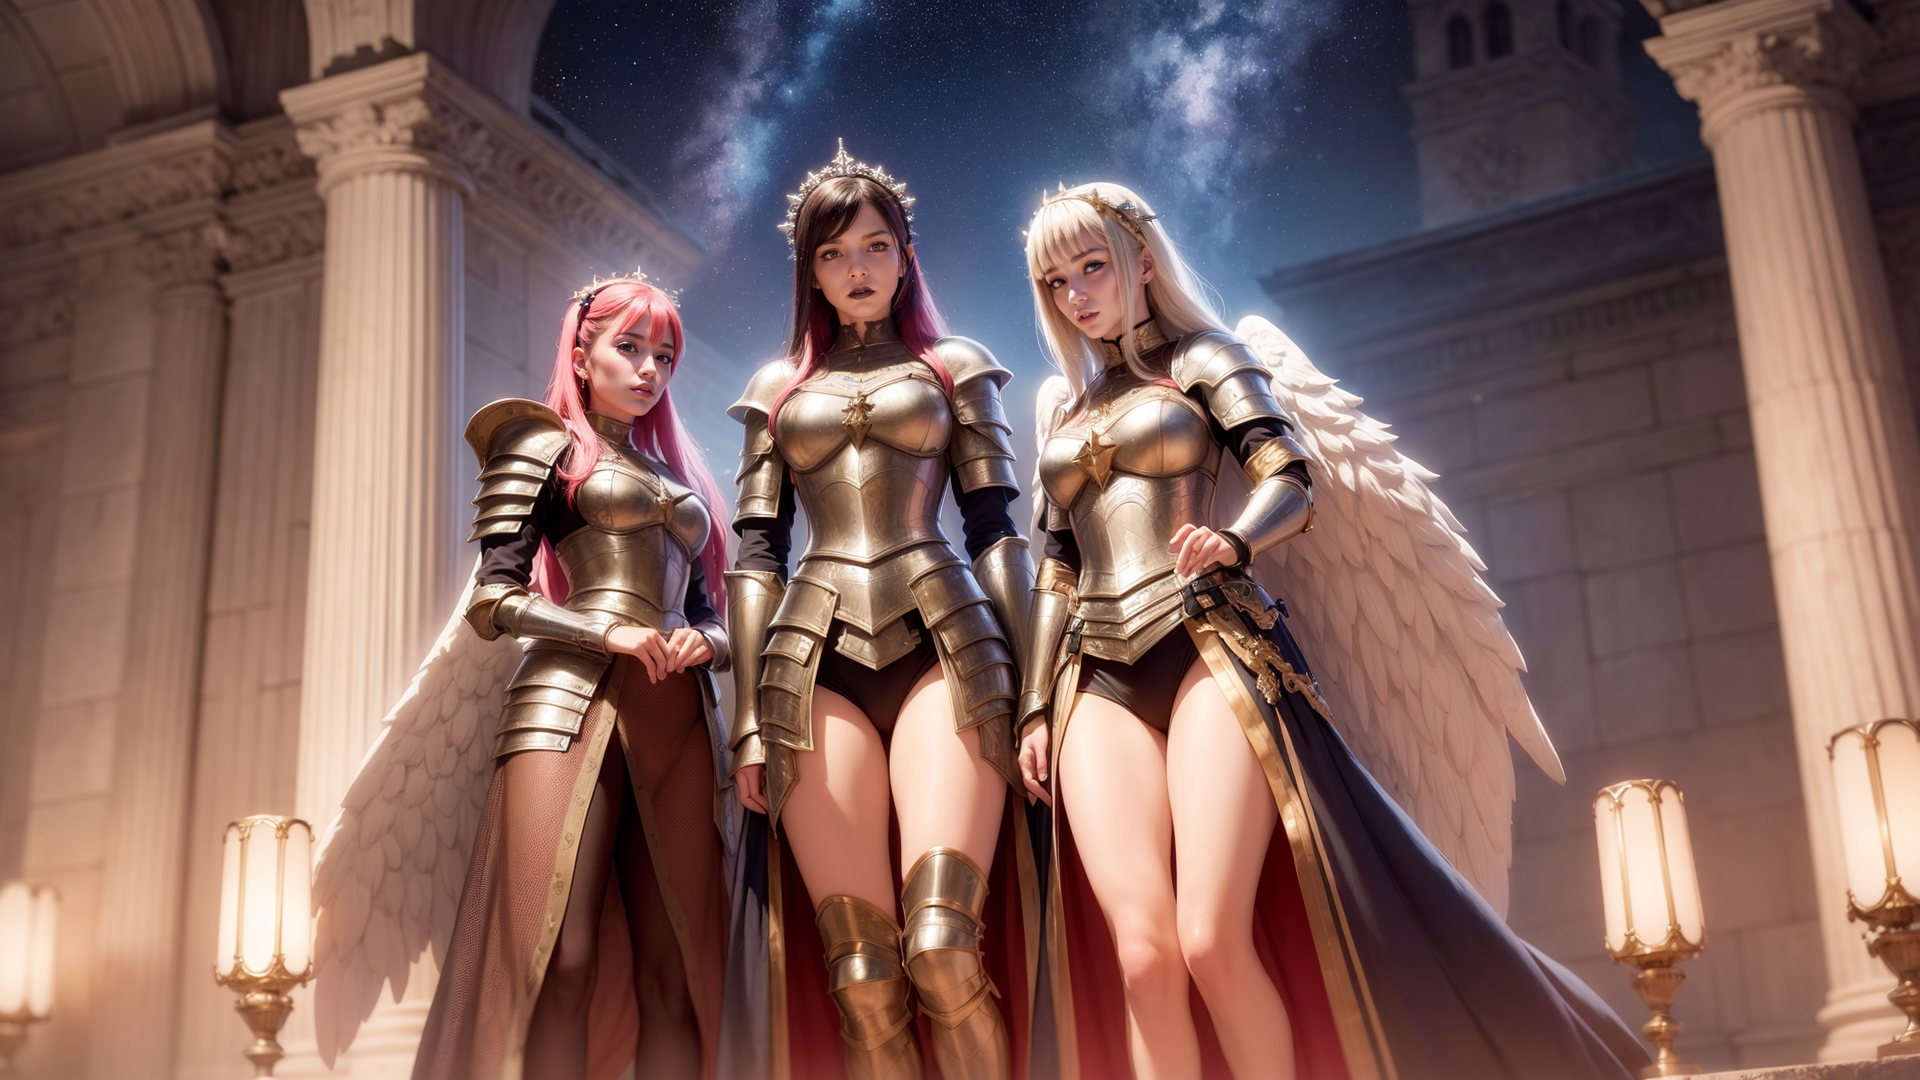 General 1920x1080 angel armor fan art women fantasy girl girl in armor digital art AI art armored woman legs low-angle wings angel wings sky looking at viewer